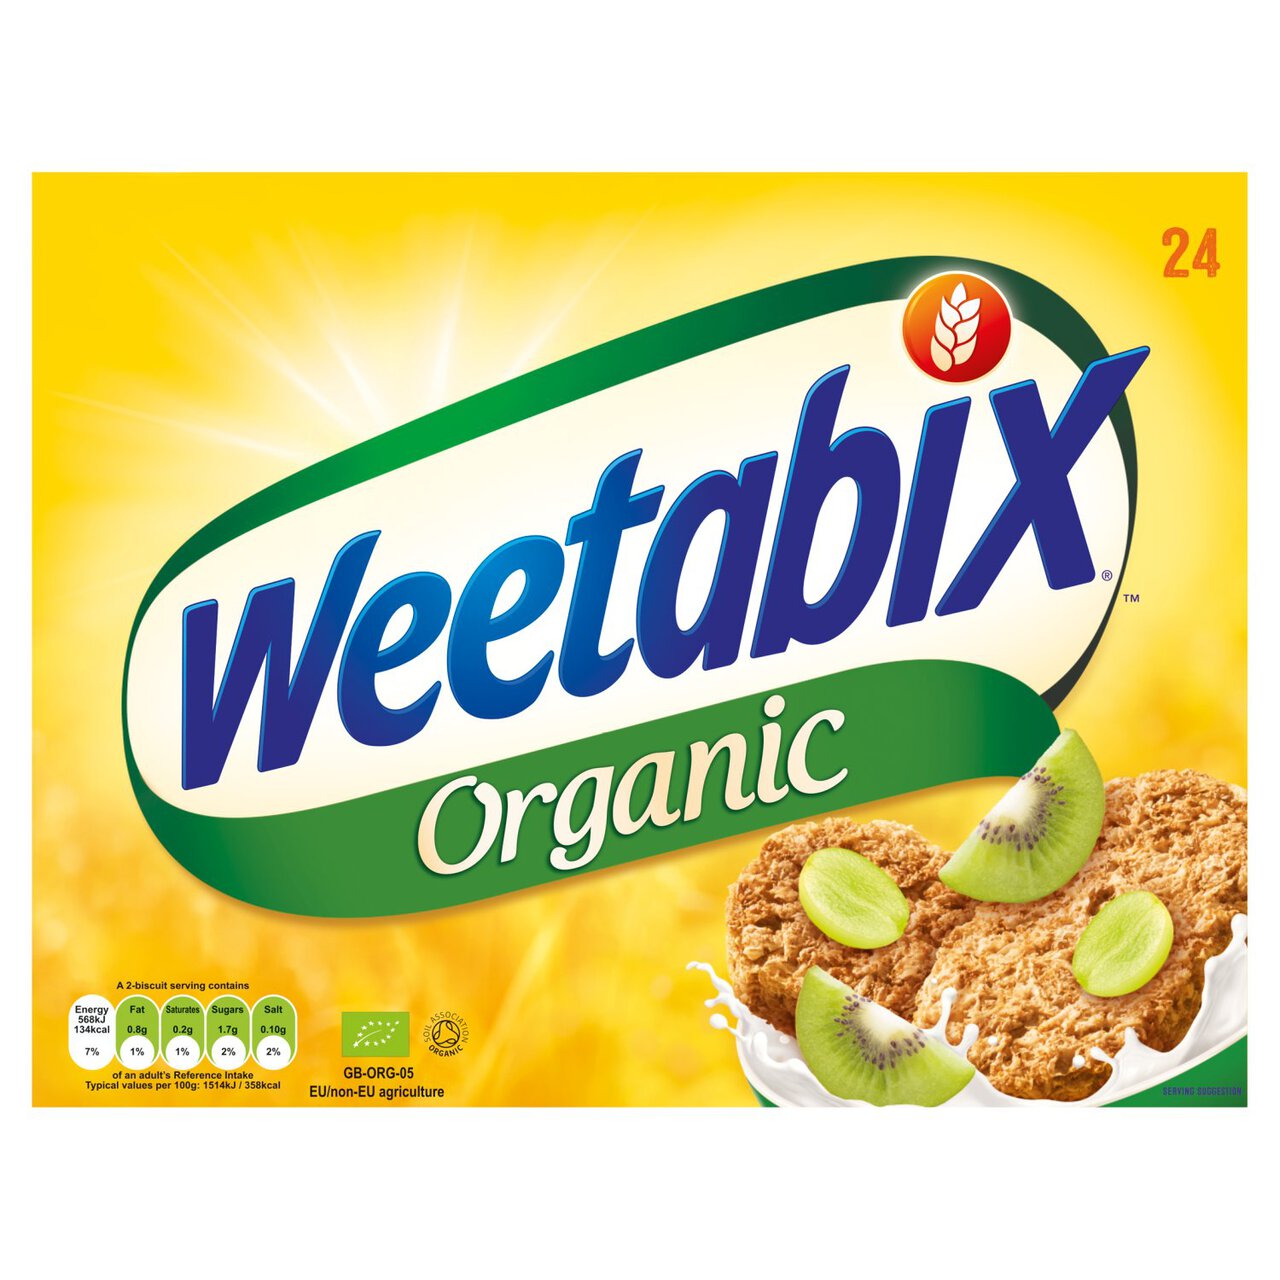 Weetabix Organic Cereal 24 Pack 24 per pack